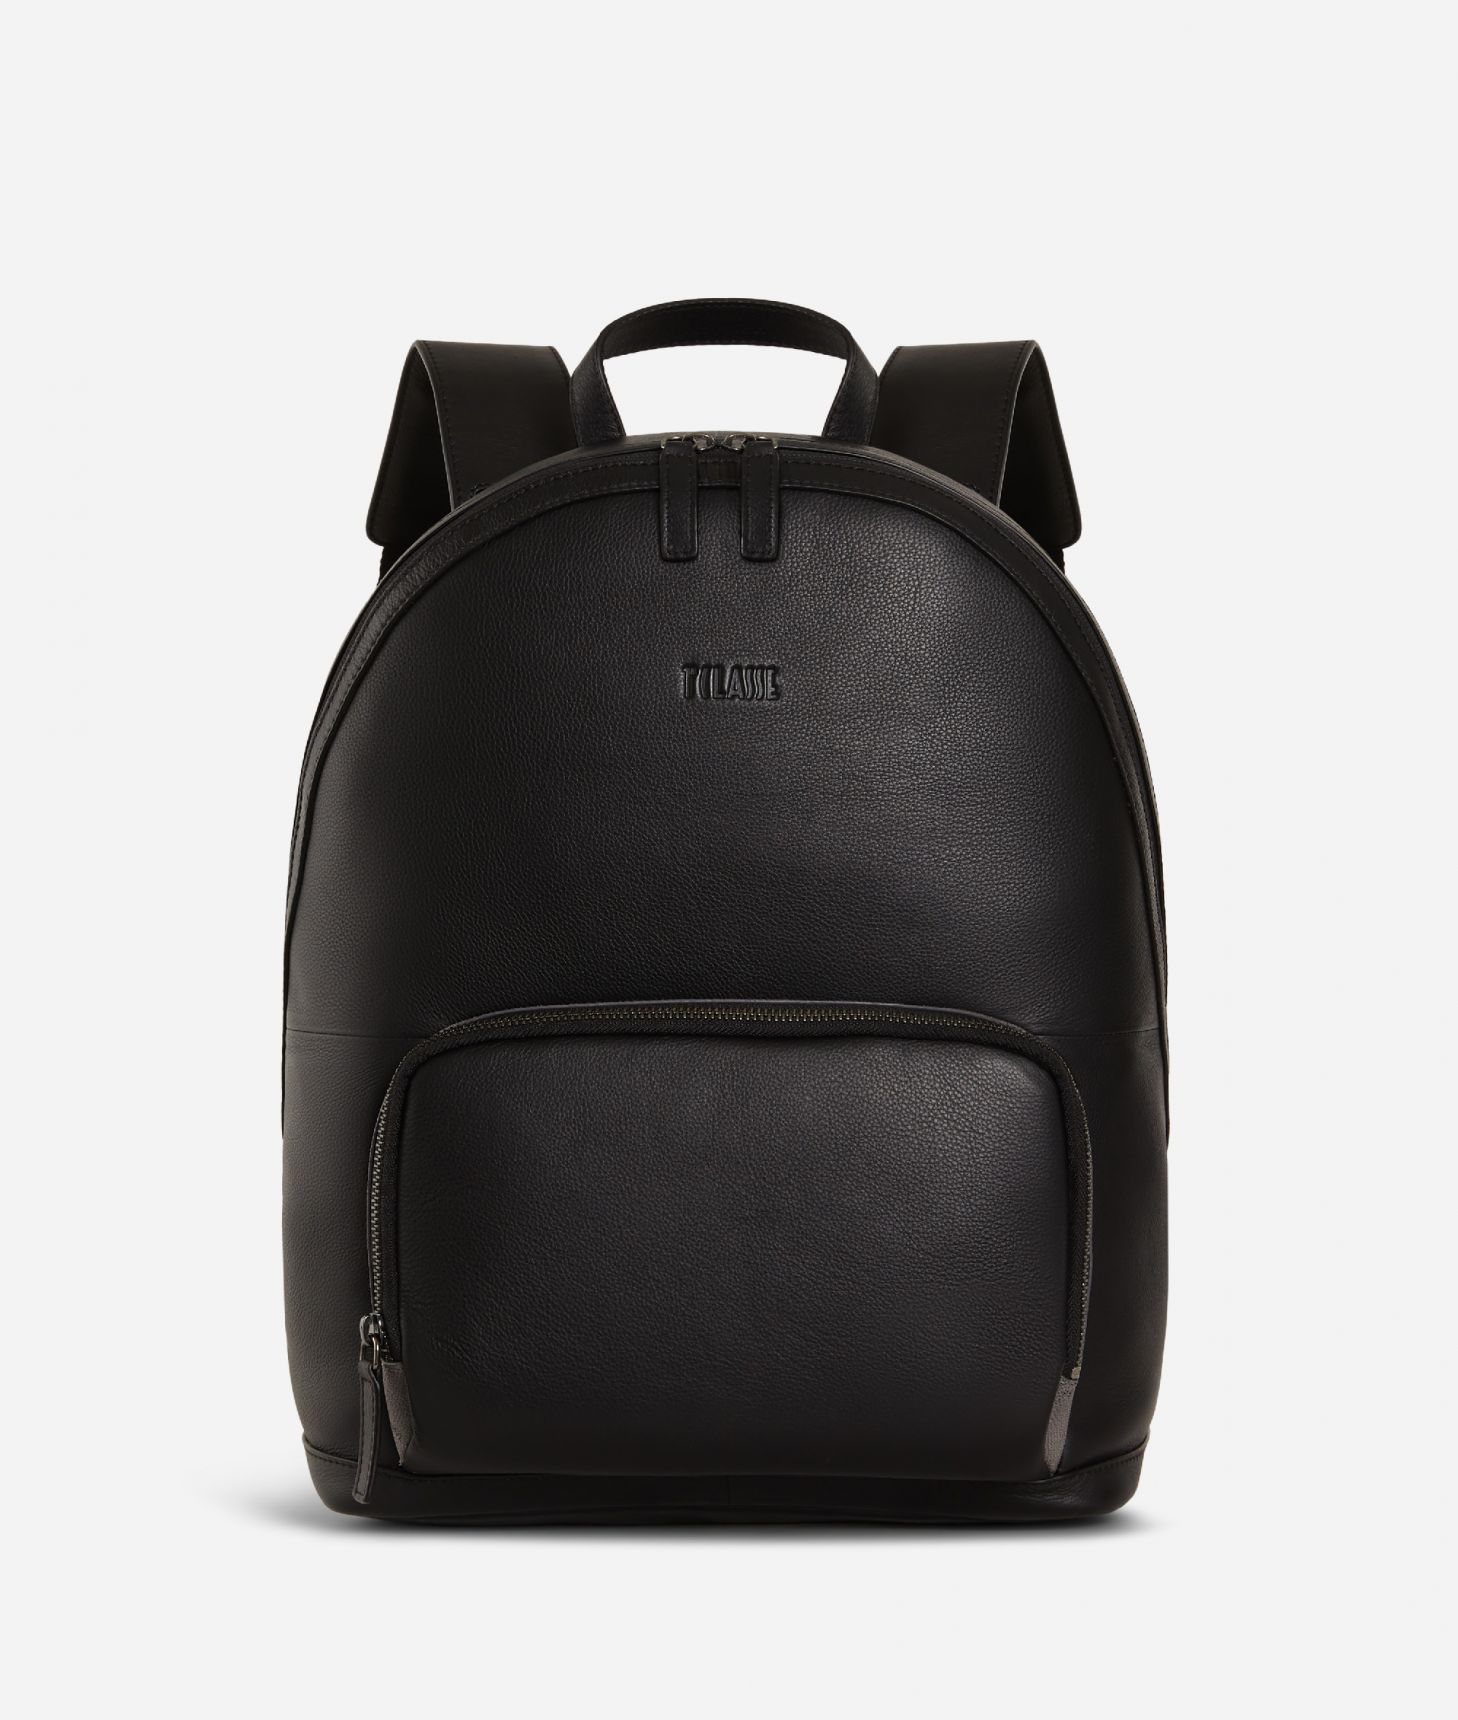 Backpack leather black,front